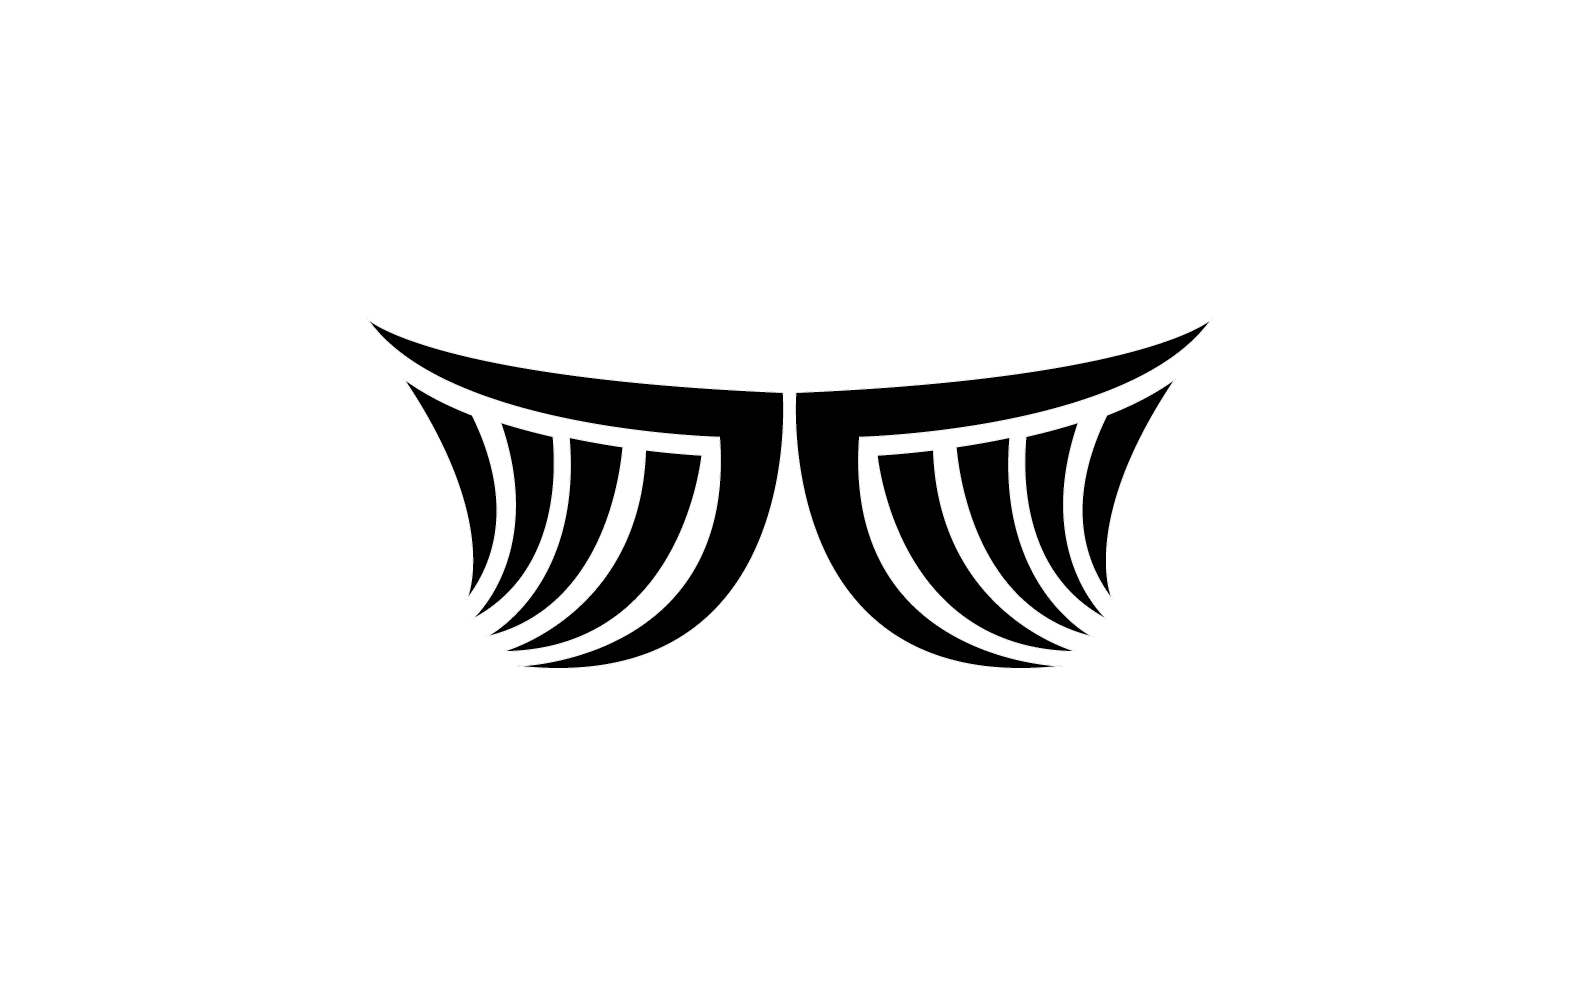 Gear machine symbol logo design vector v24